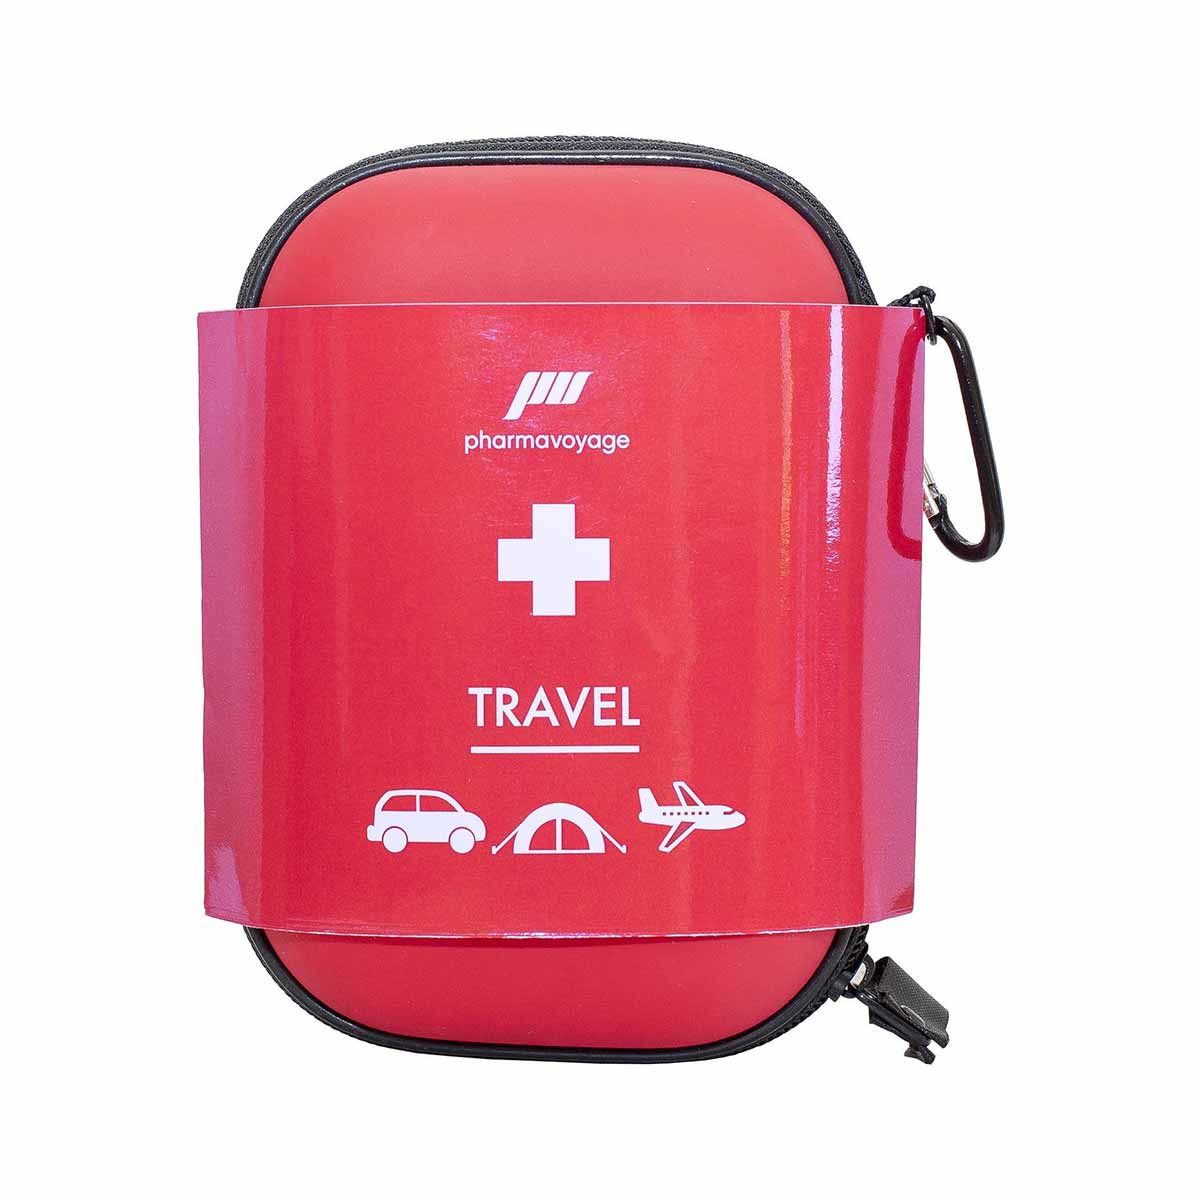 Pharmavoyage Travel durable first aid kit